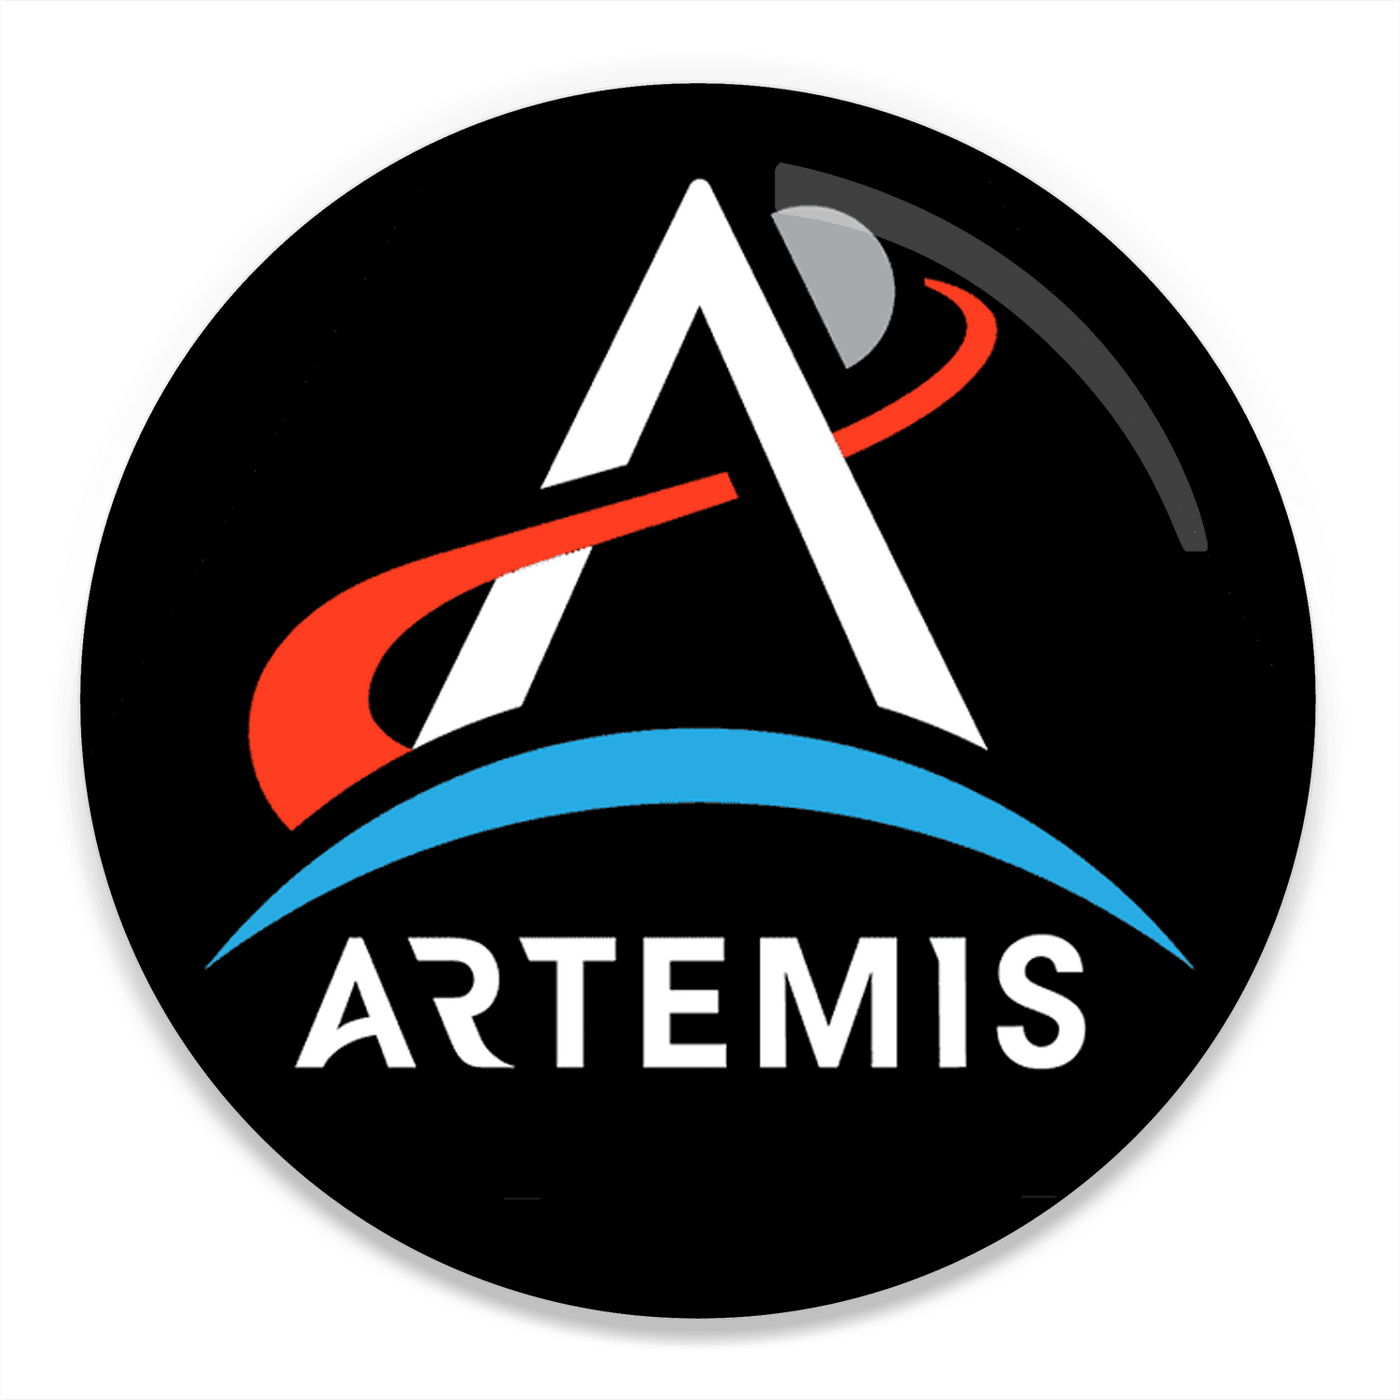 Artemis Patch - 2.25" Round Magnet